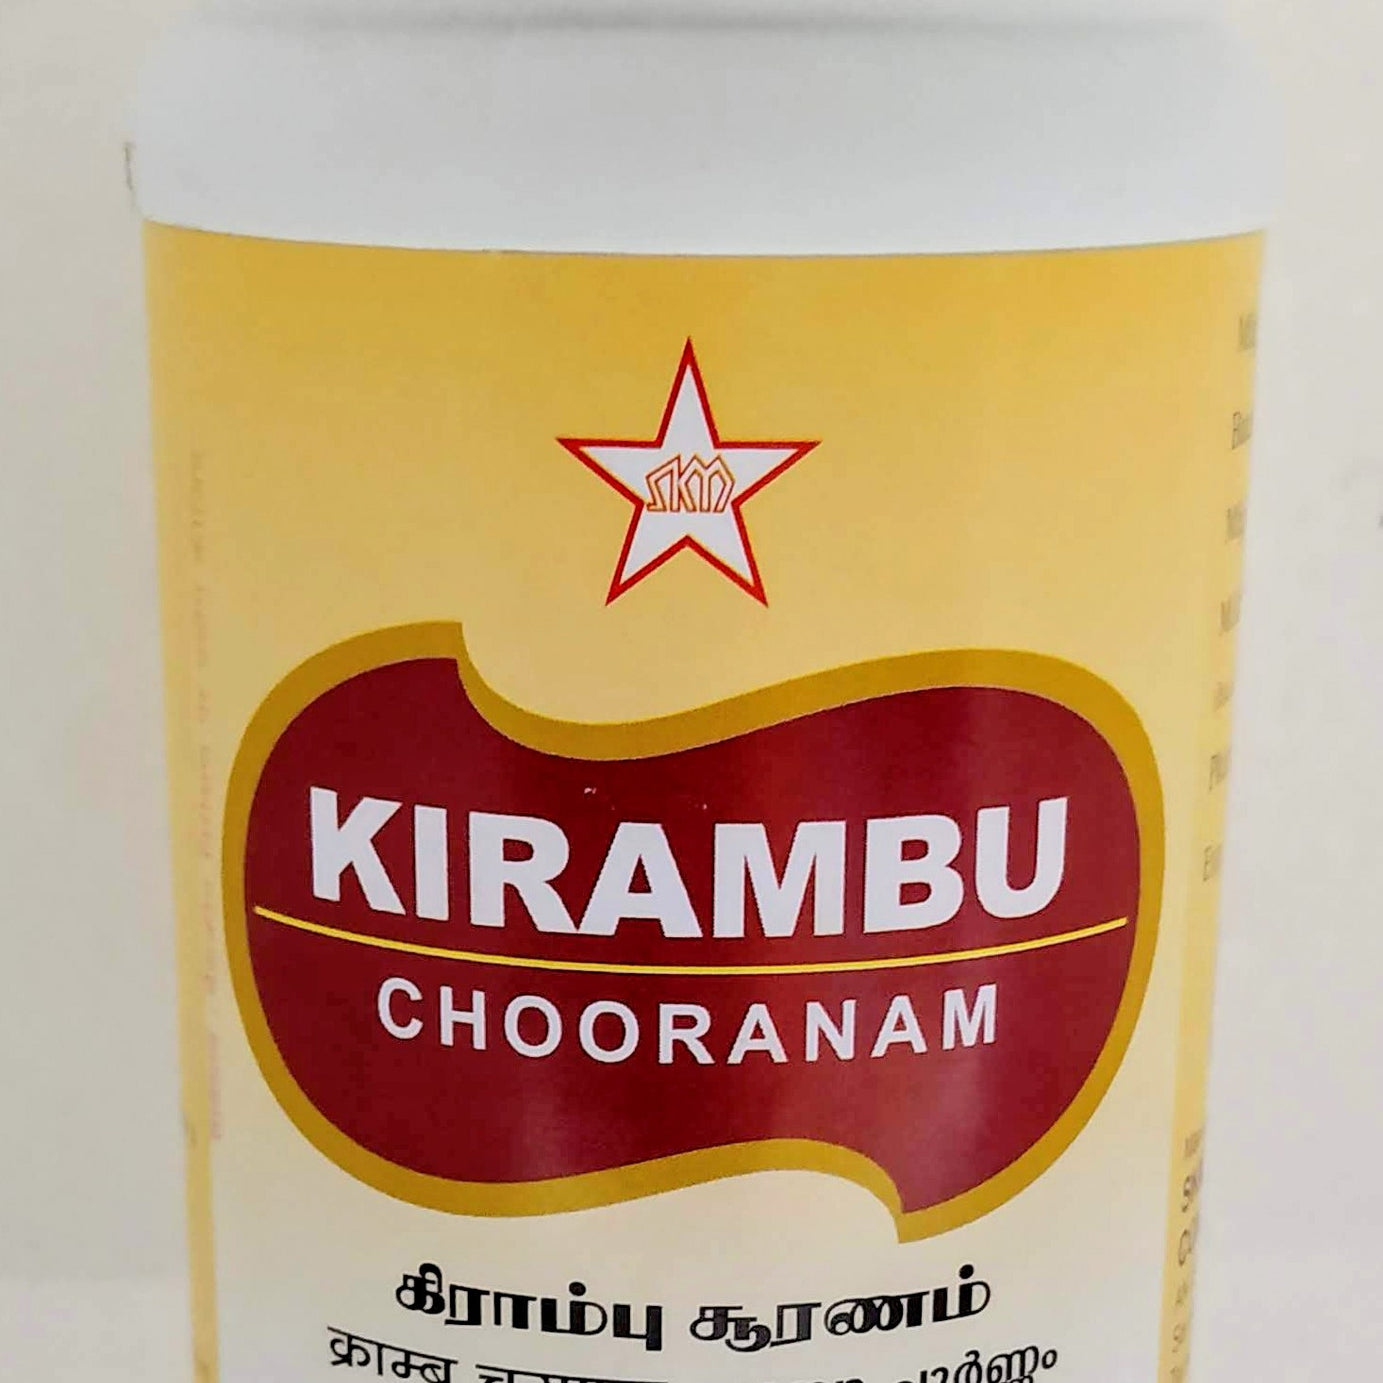 Shop SKM Kirambu Chooranam 100g at price 185.00 from SKM Online - Ayush Care